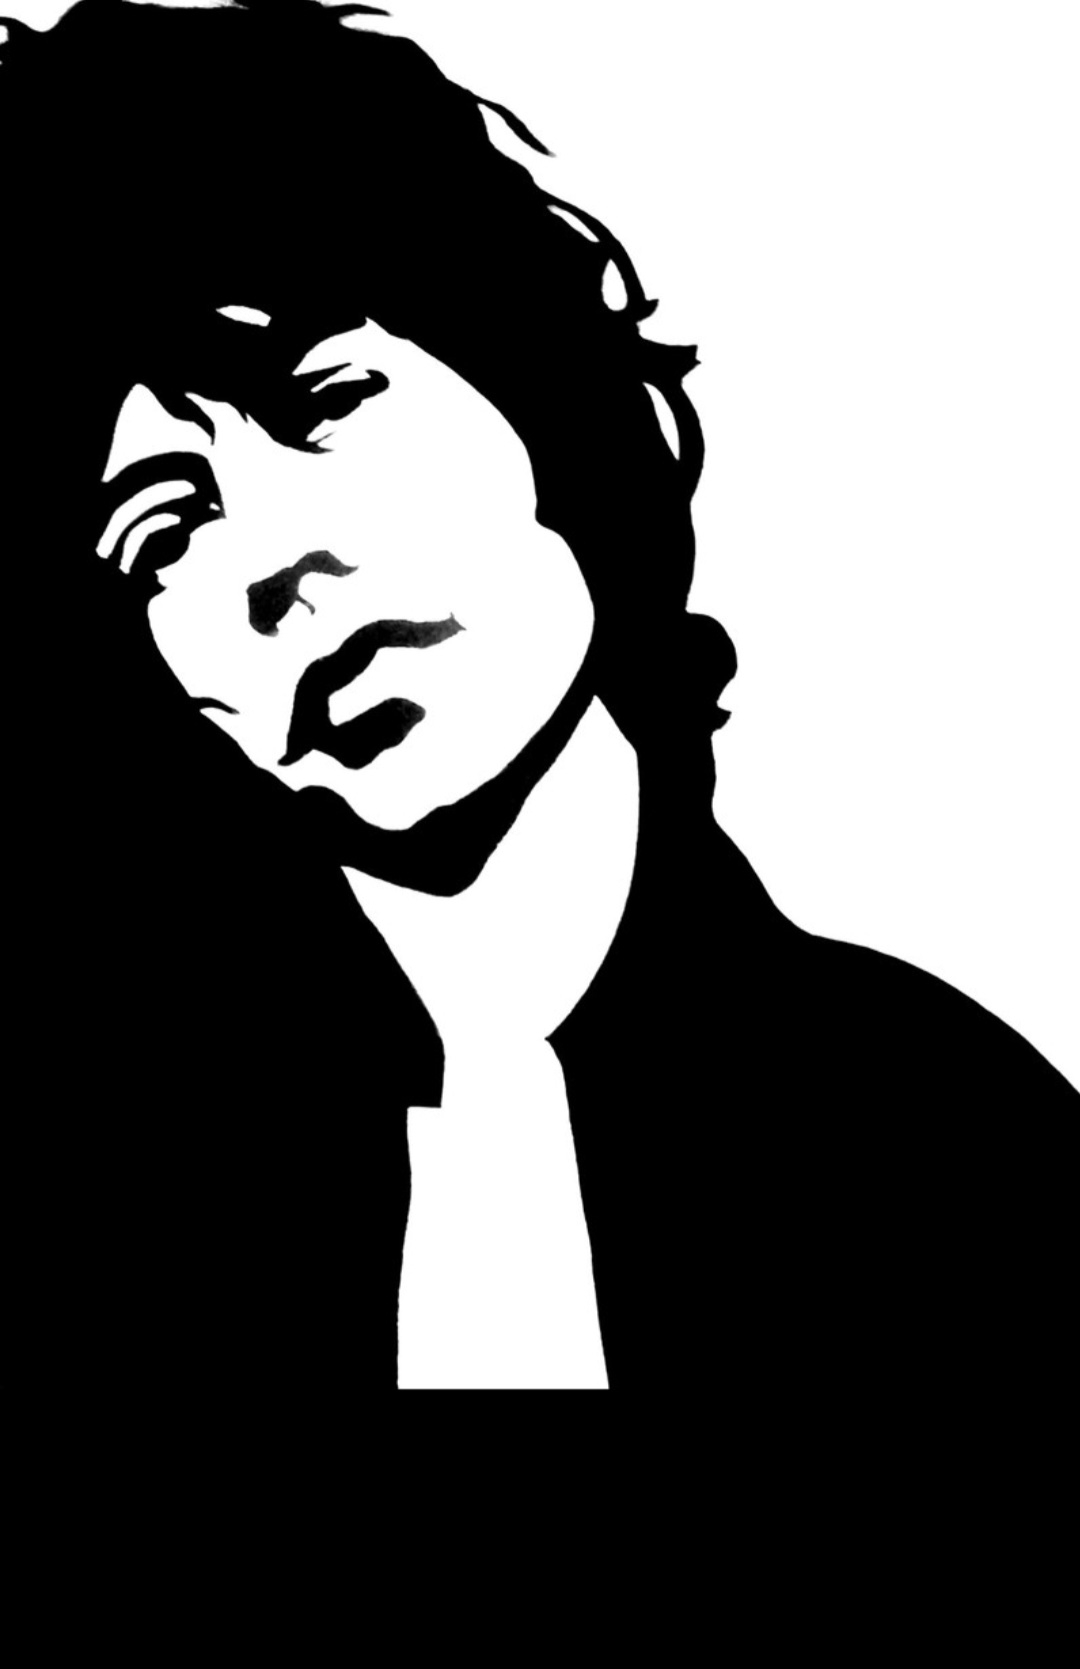 Mick Jagger 80x60